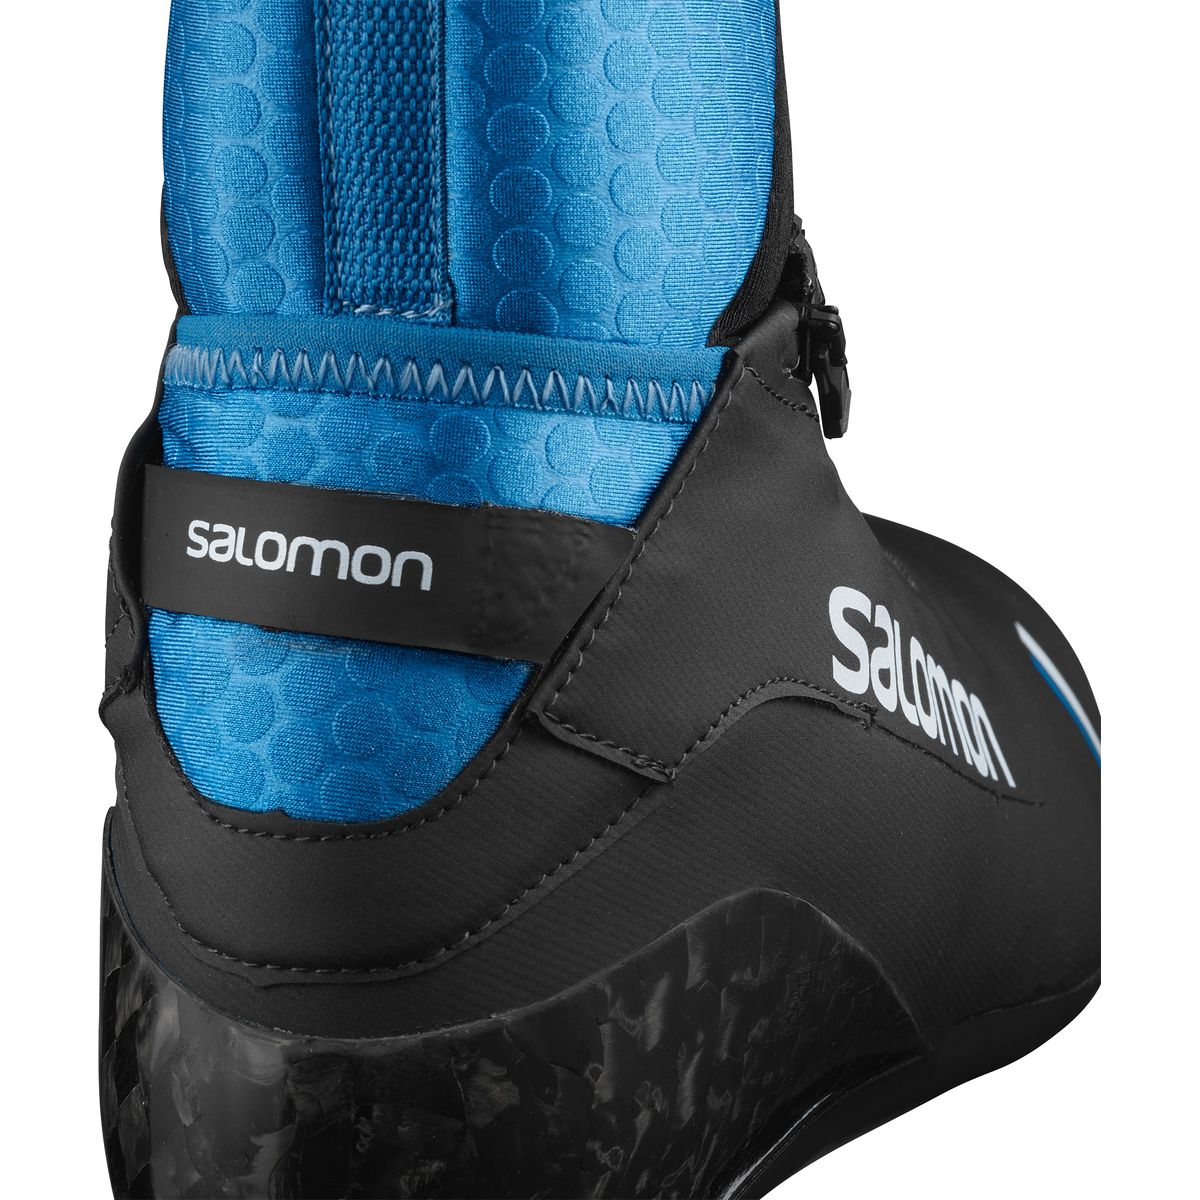 Salomon S/Race Classic Prolink Langlaufschuhe